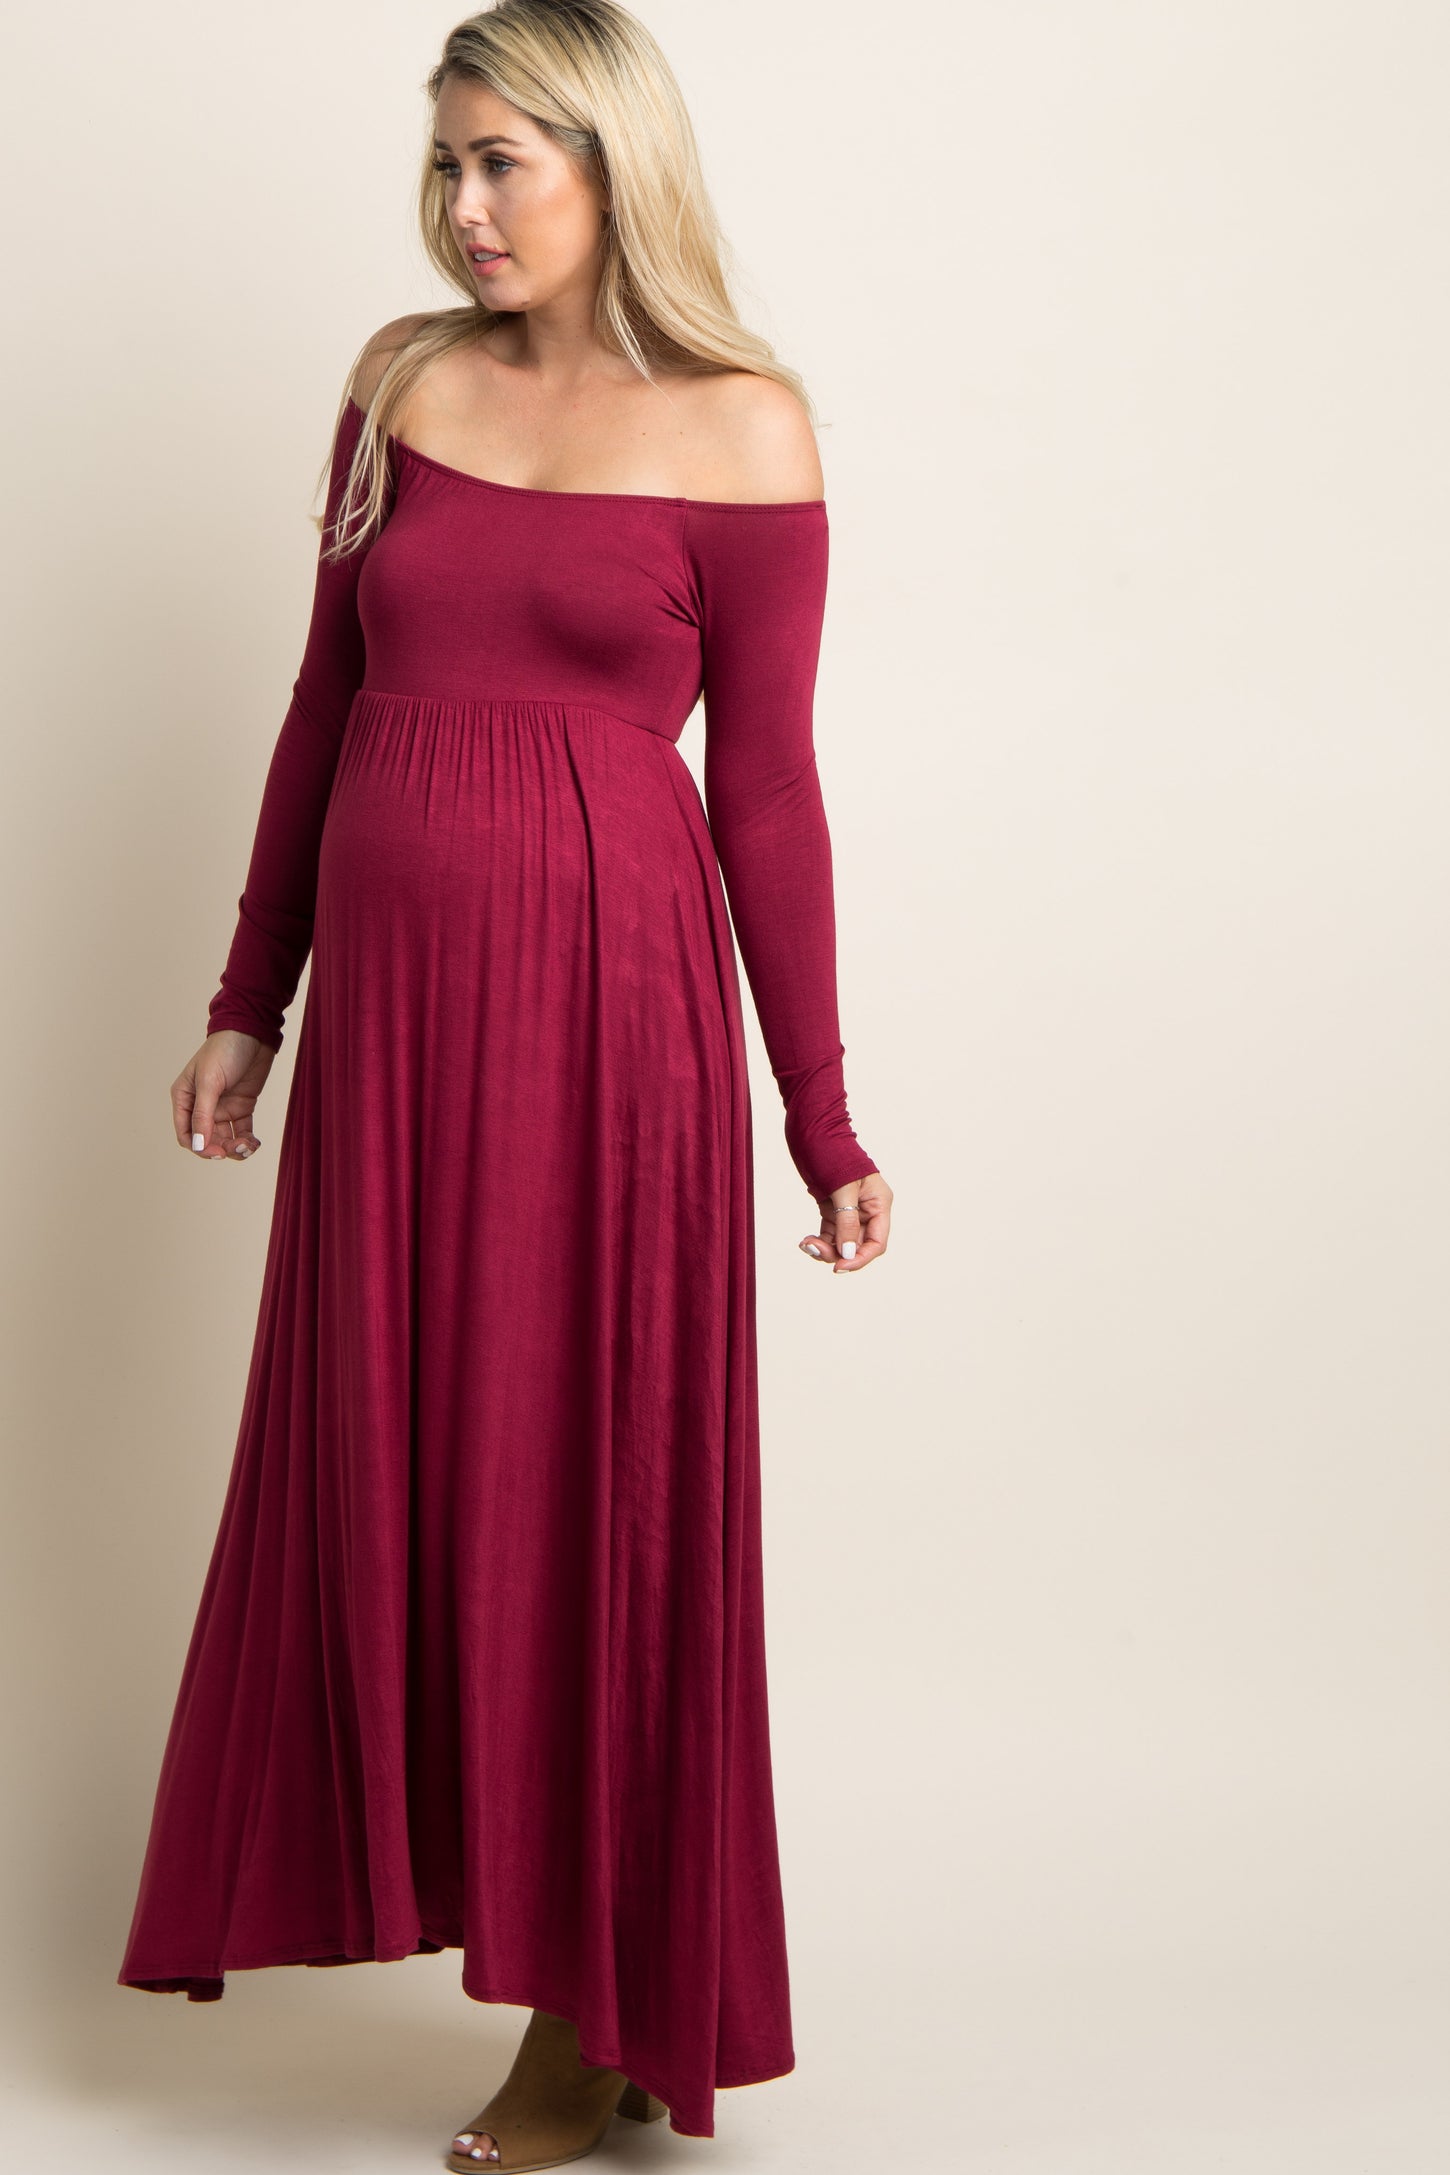 Dark Burgundy Solid Off Shoulder Maternity Maxi Dress